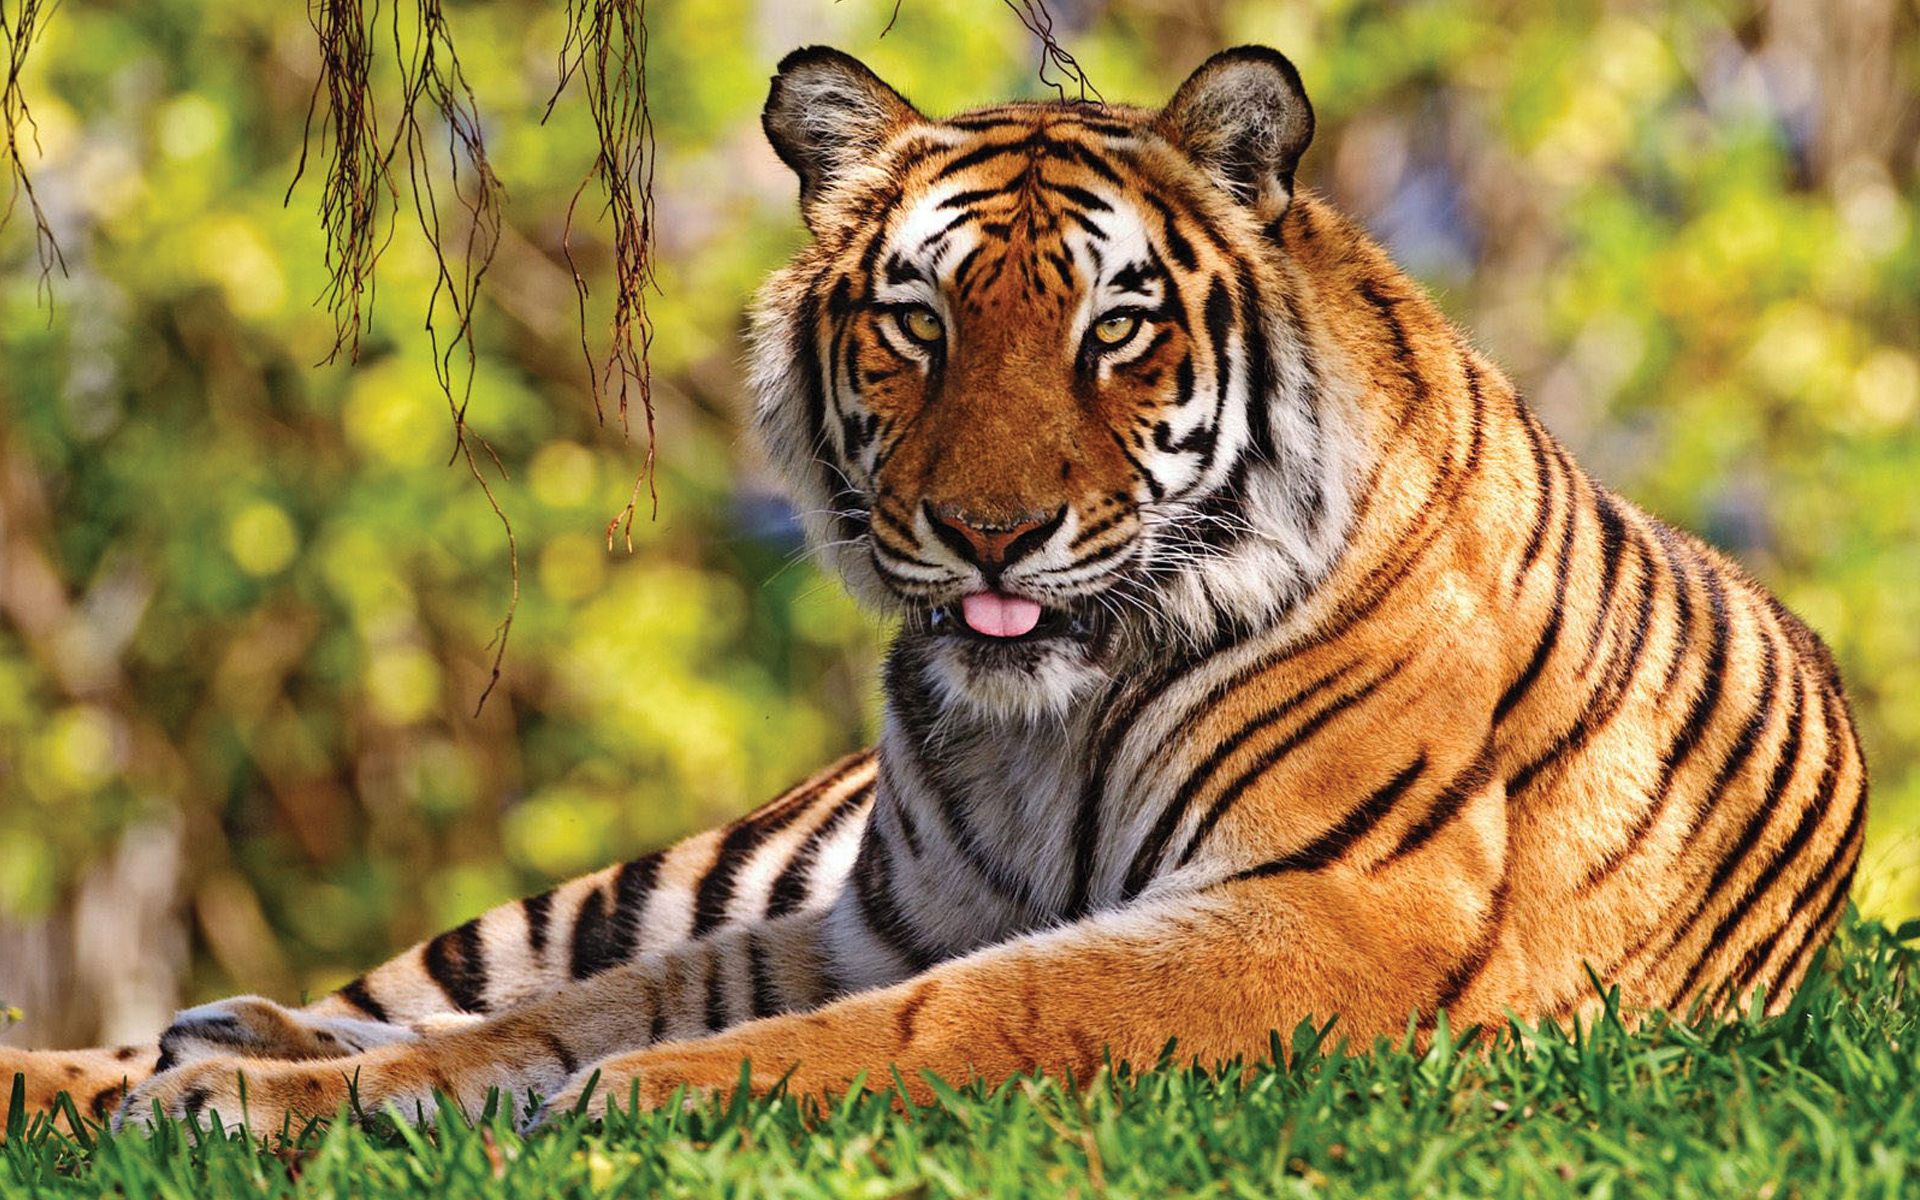 animals, grass, to lie down, lie, predator, big cat, tiger, language, tongue